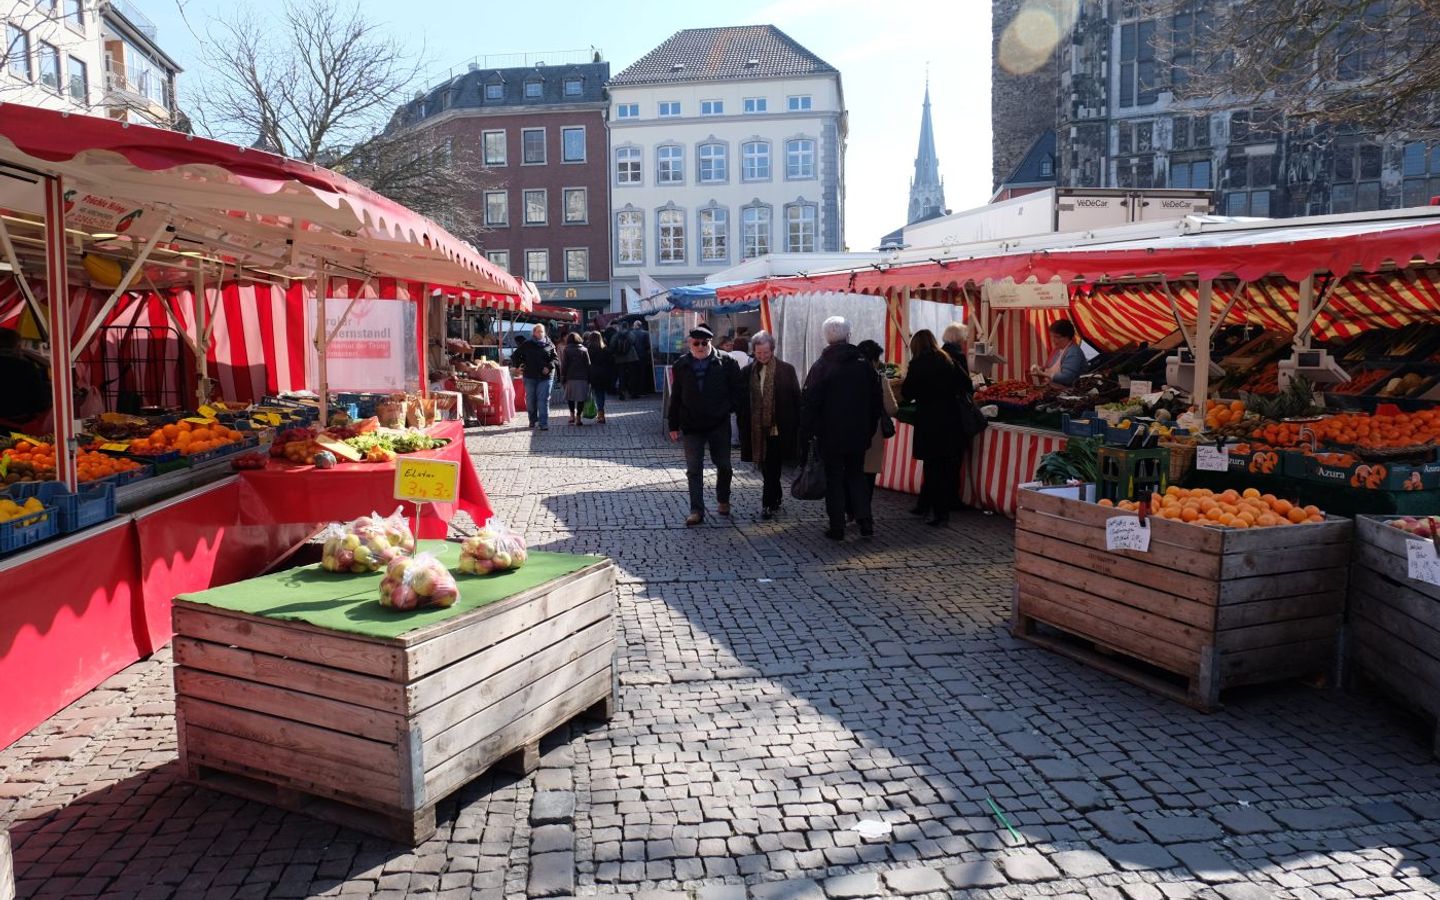 Weekly markt on the Aachen Markt square